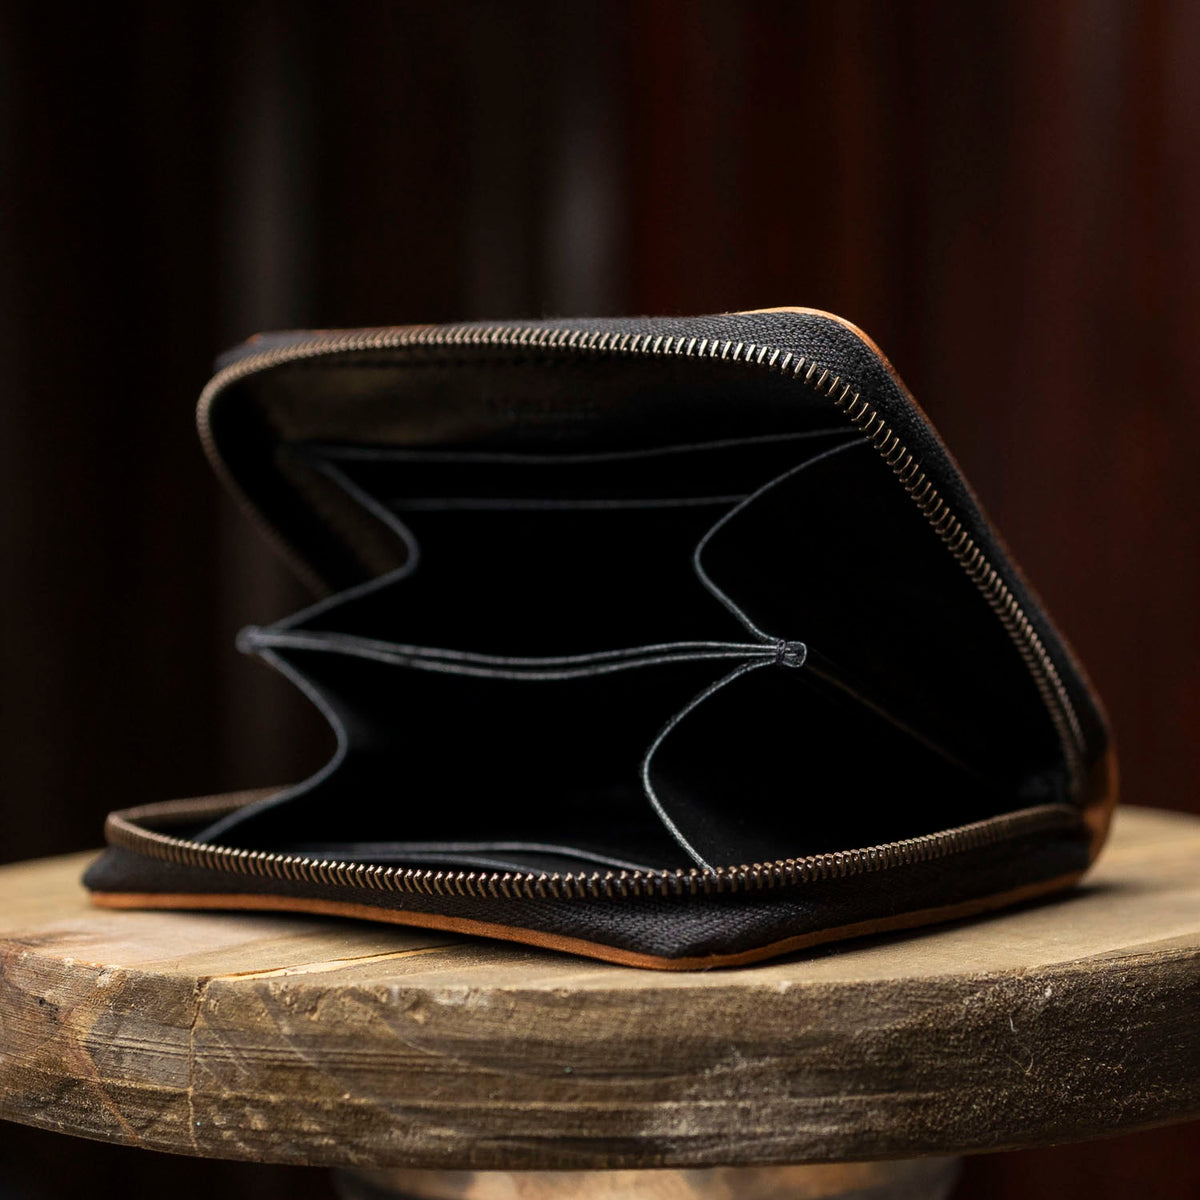 Men's Wallet - Premium Horween Leather - 100% Made in USA - zipper